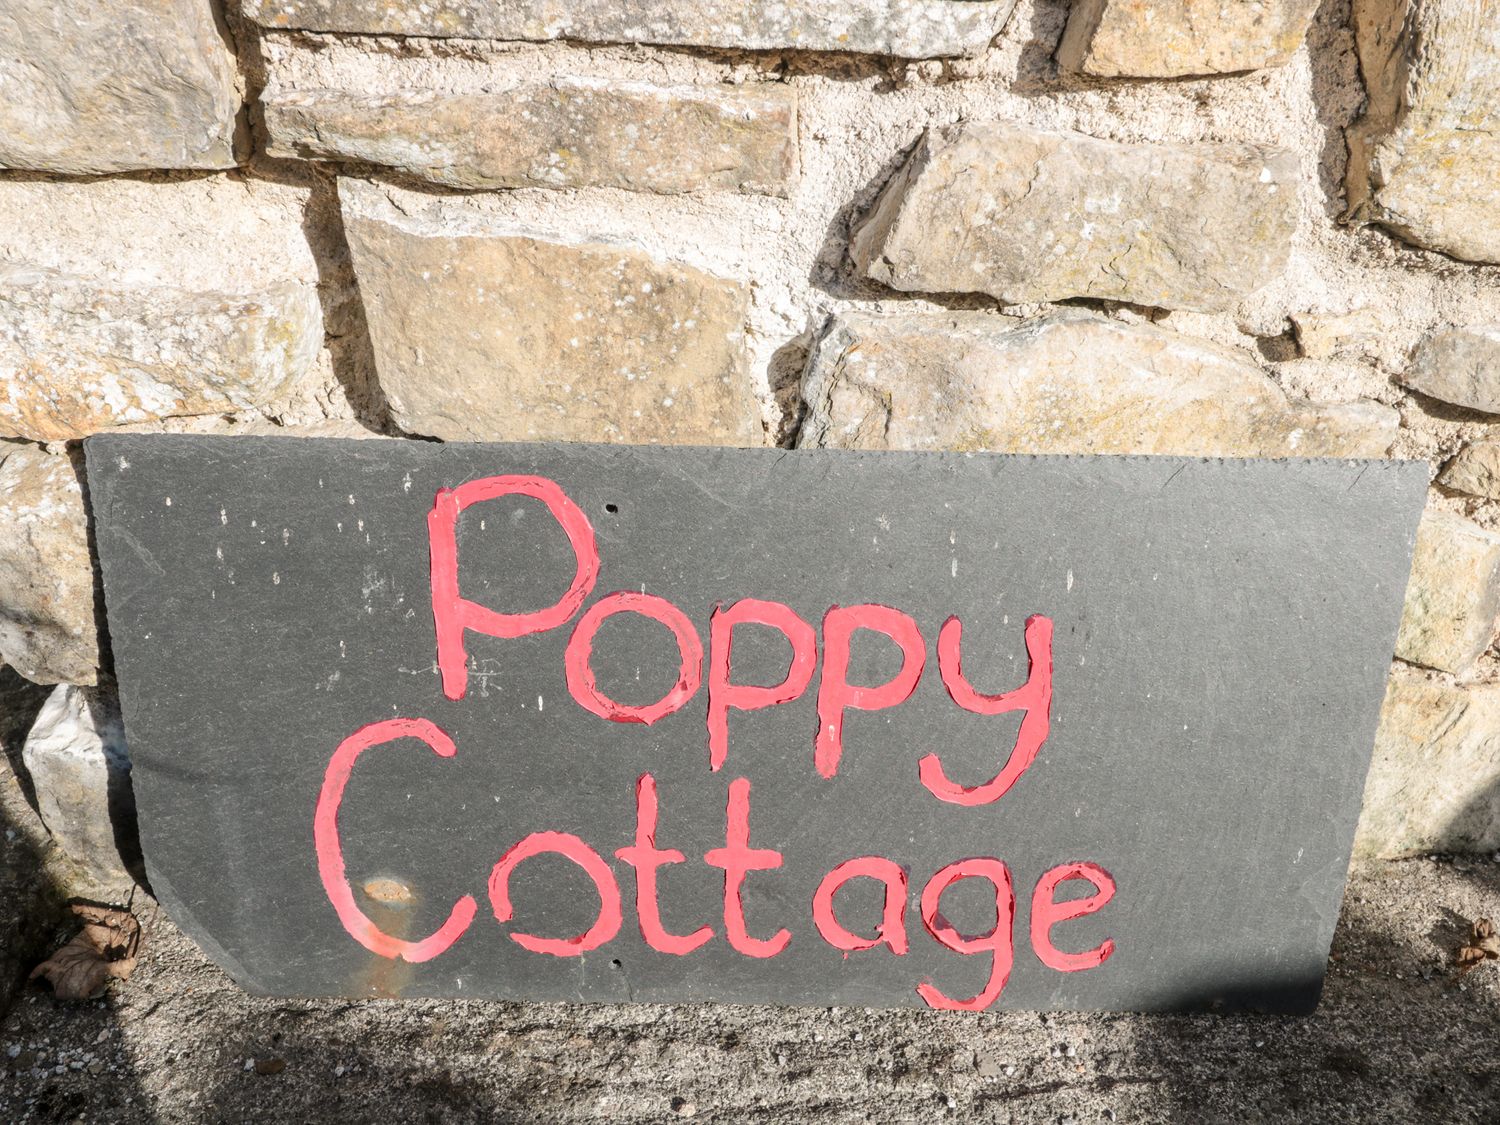 Poppy Cottage, Llantwit Major